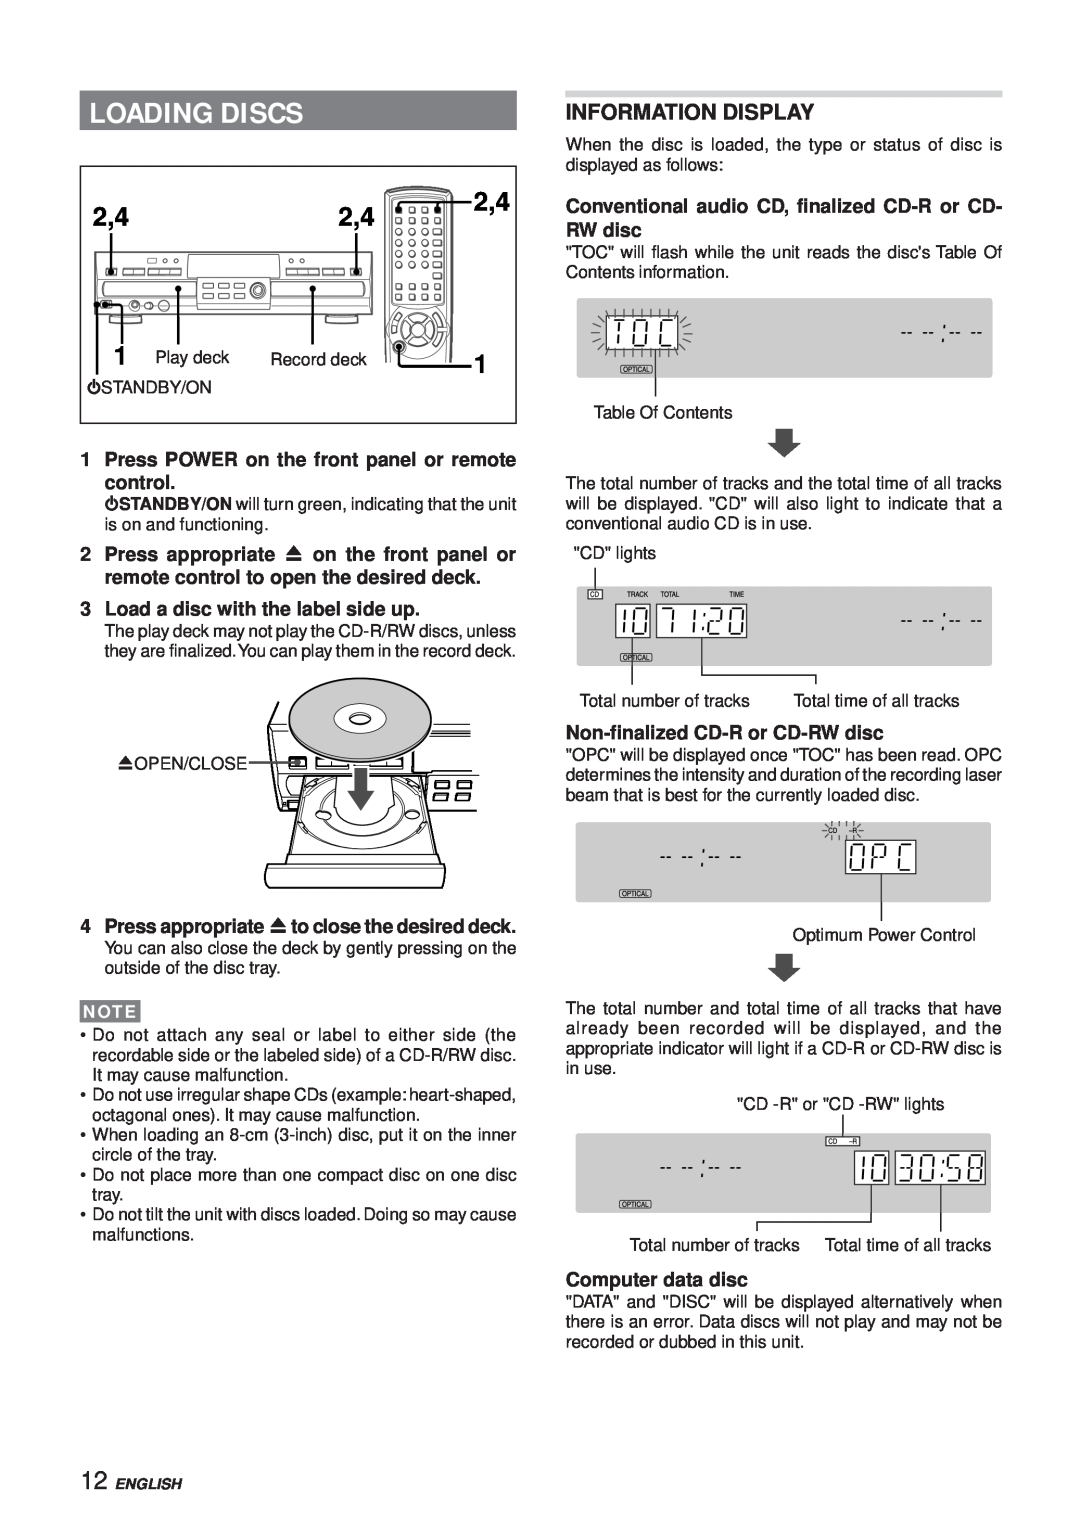 Aiwa XC-RW700 manual Loading Discs, Information Display 